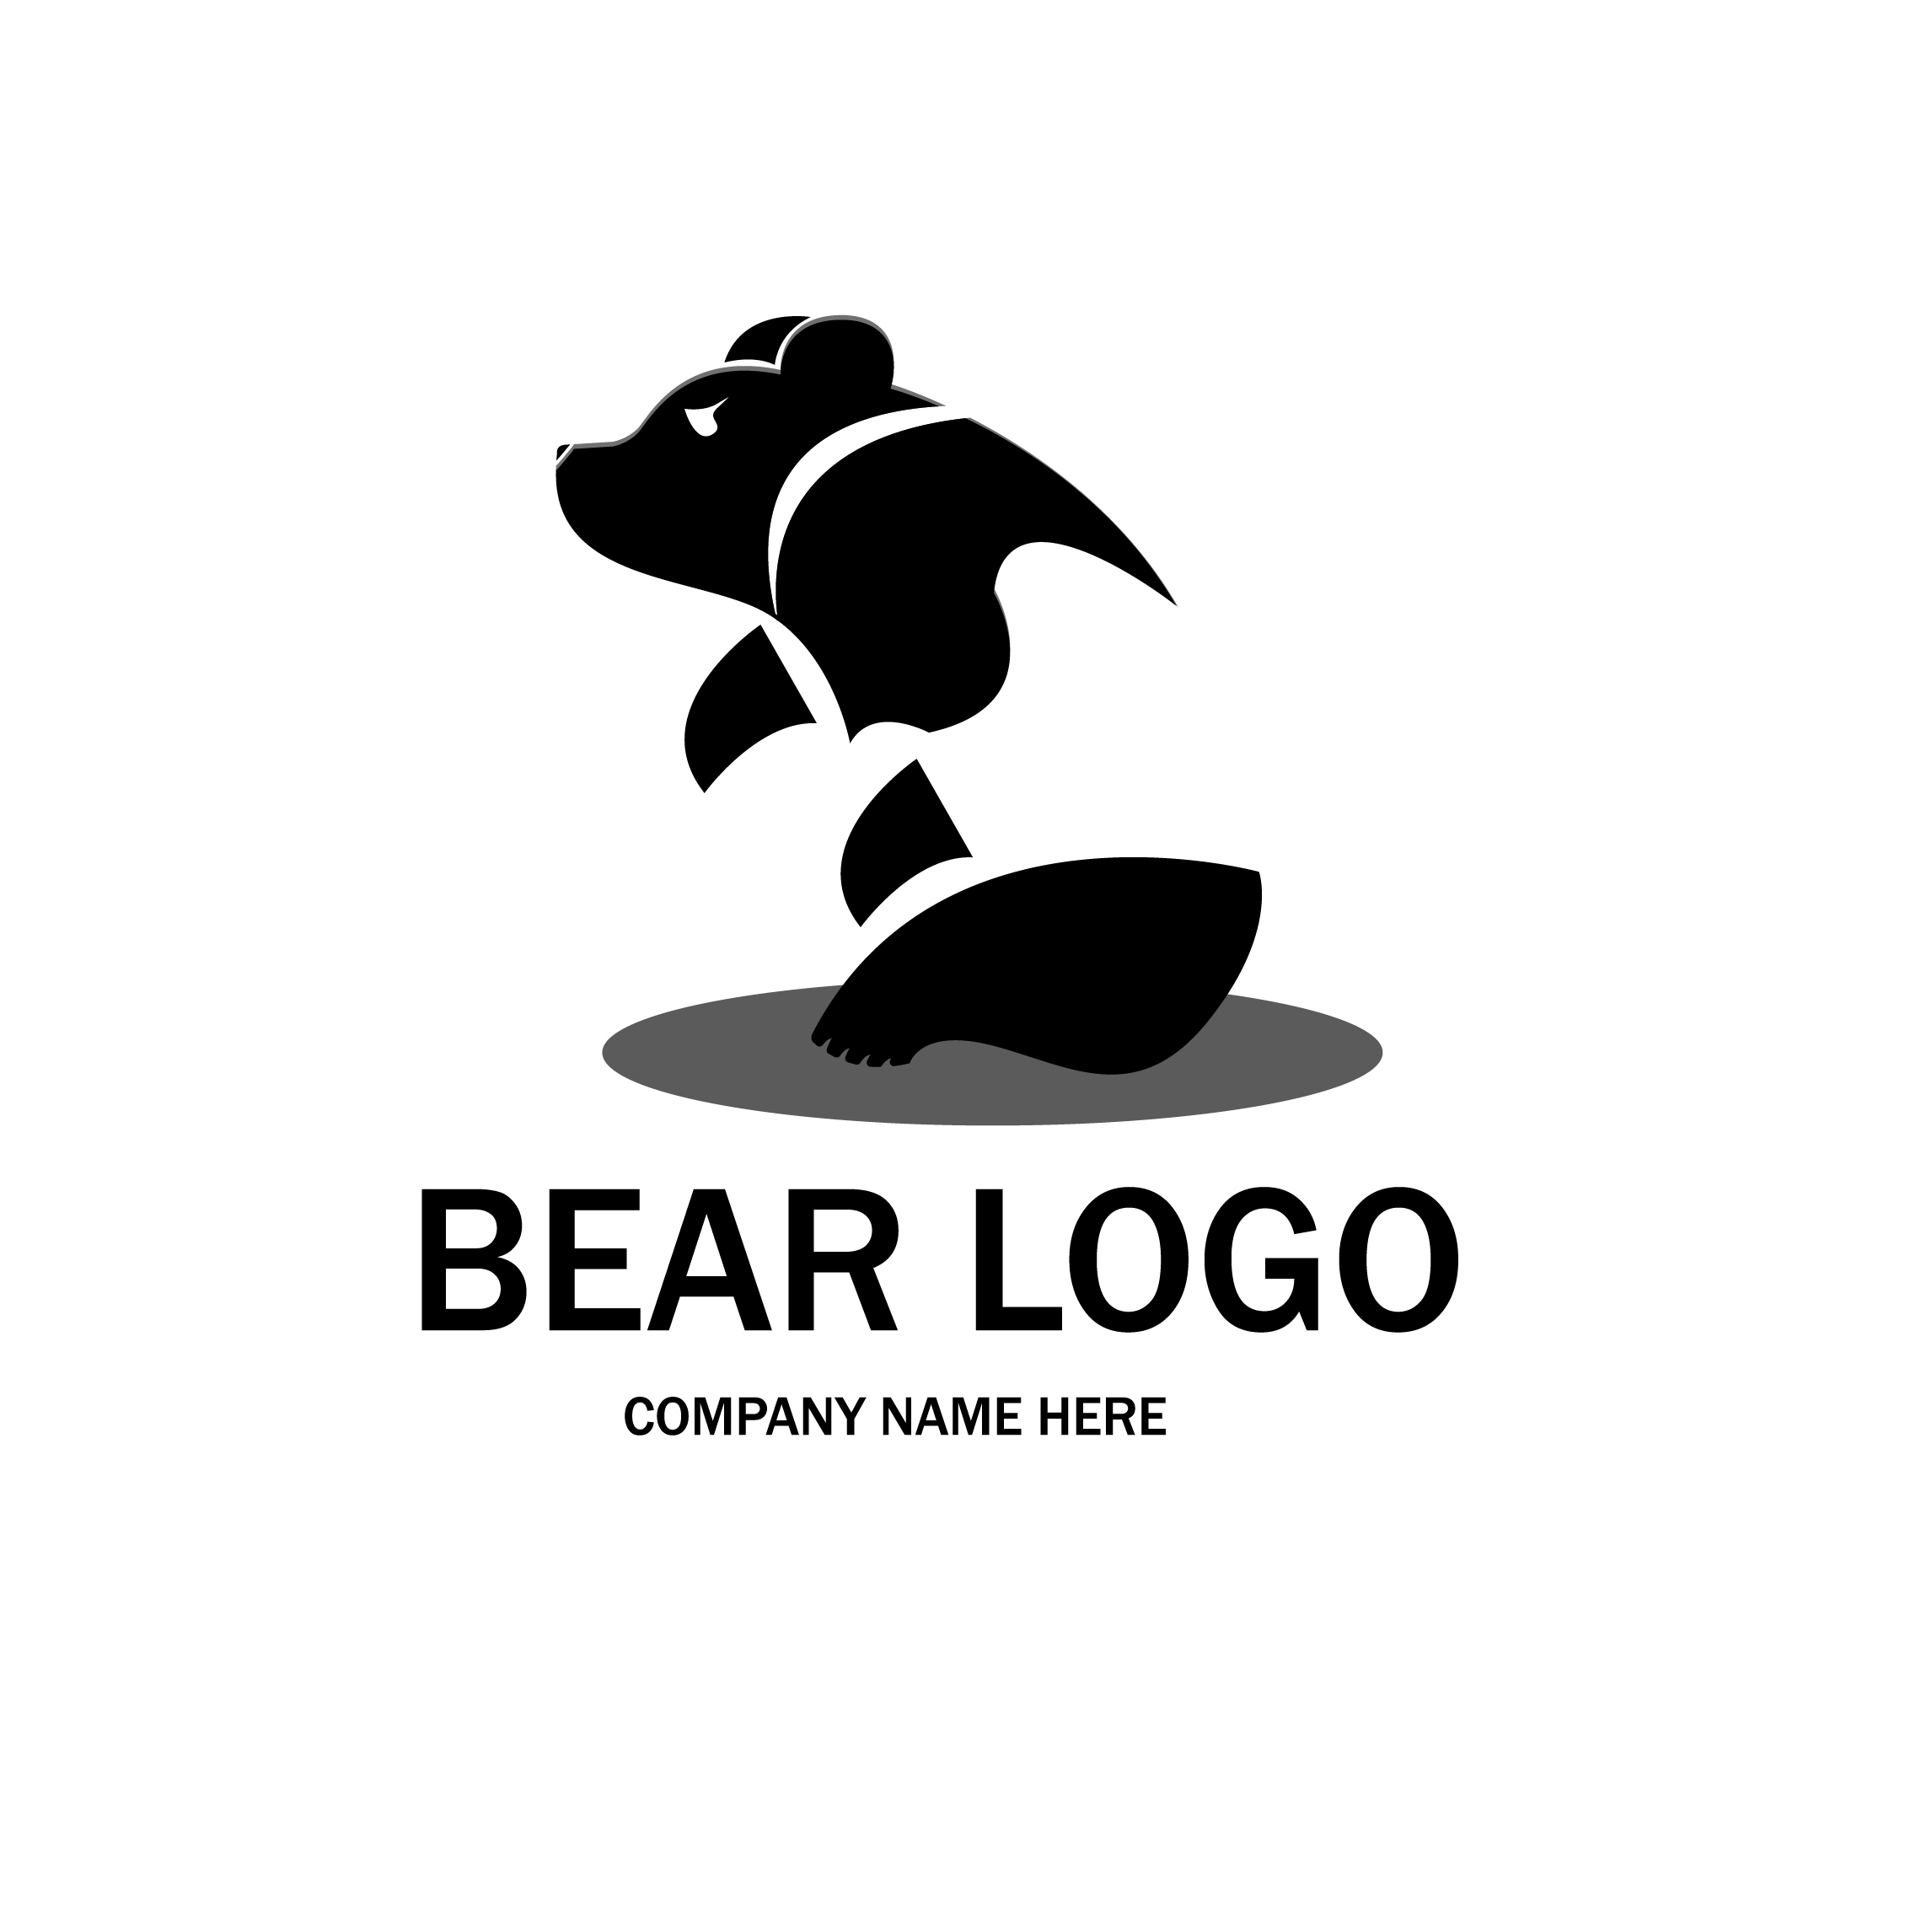 Bear Logo Templates cover image.